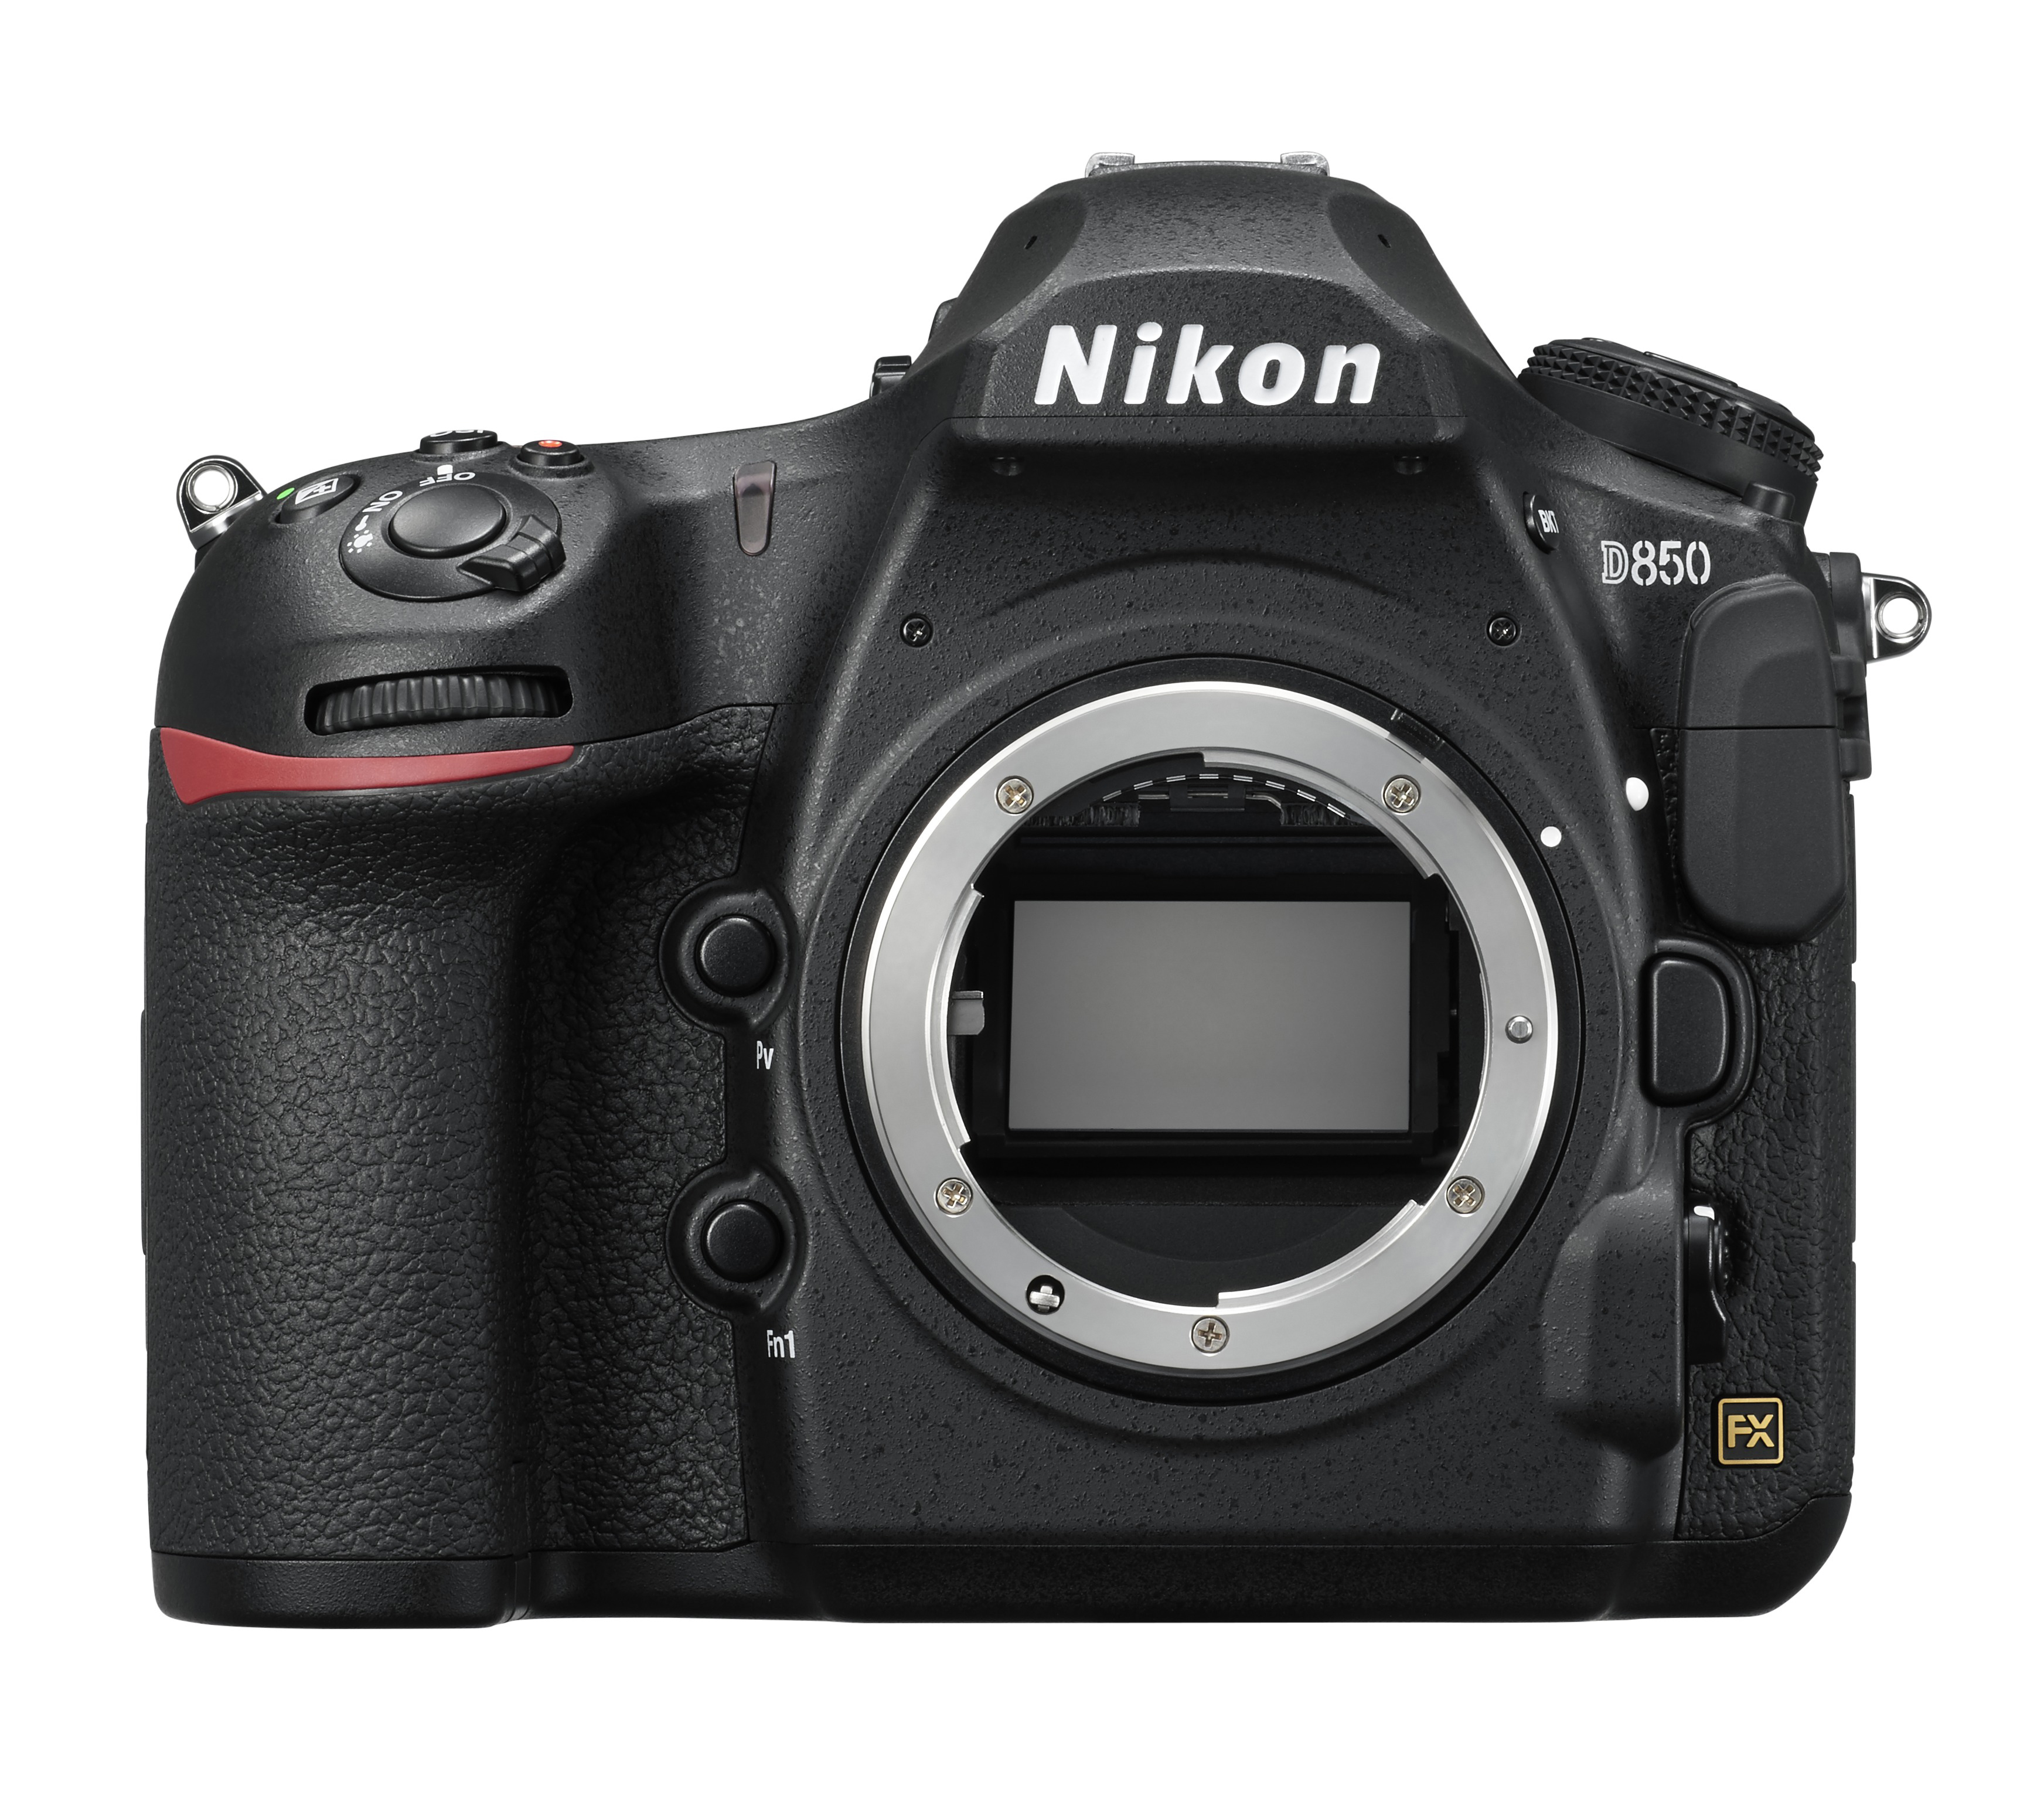 NIKON D850 Body Spiegelreflexkamera, 45,7 Megapixel, Schwarz Display, WLAN, Touchscreen